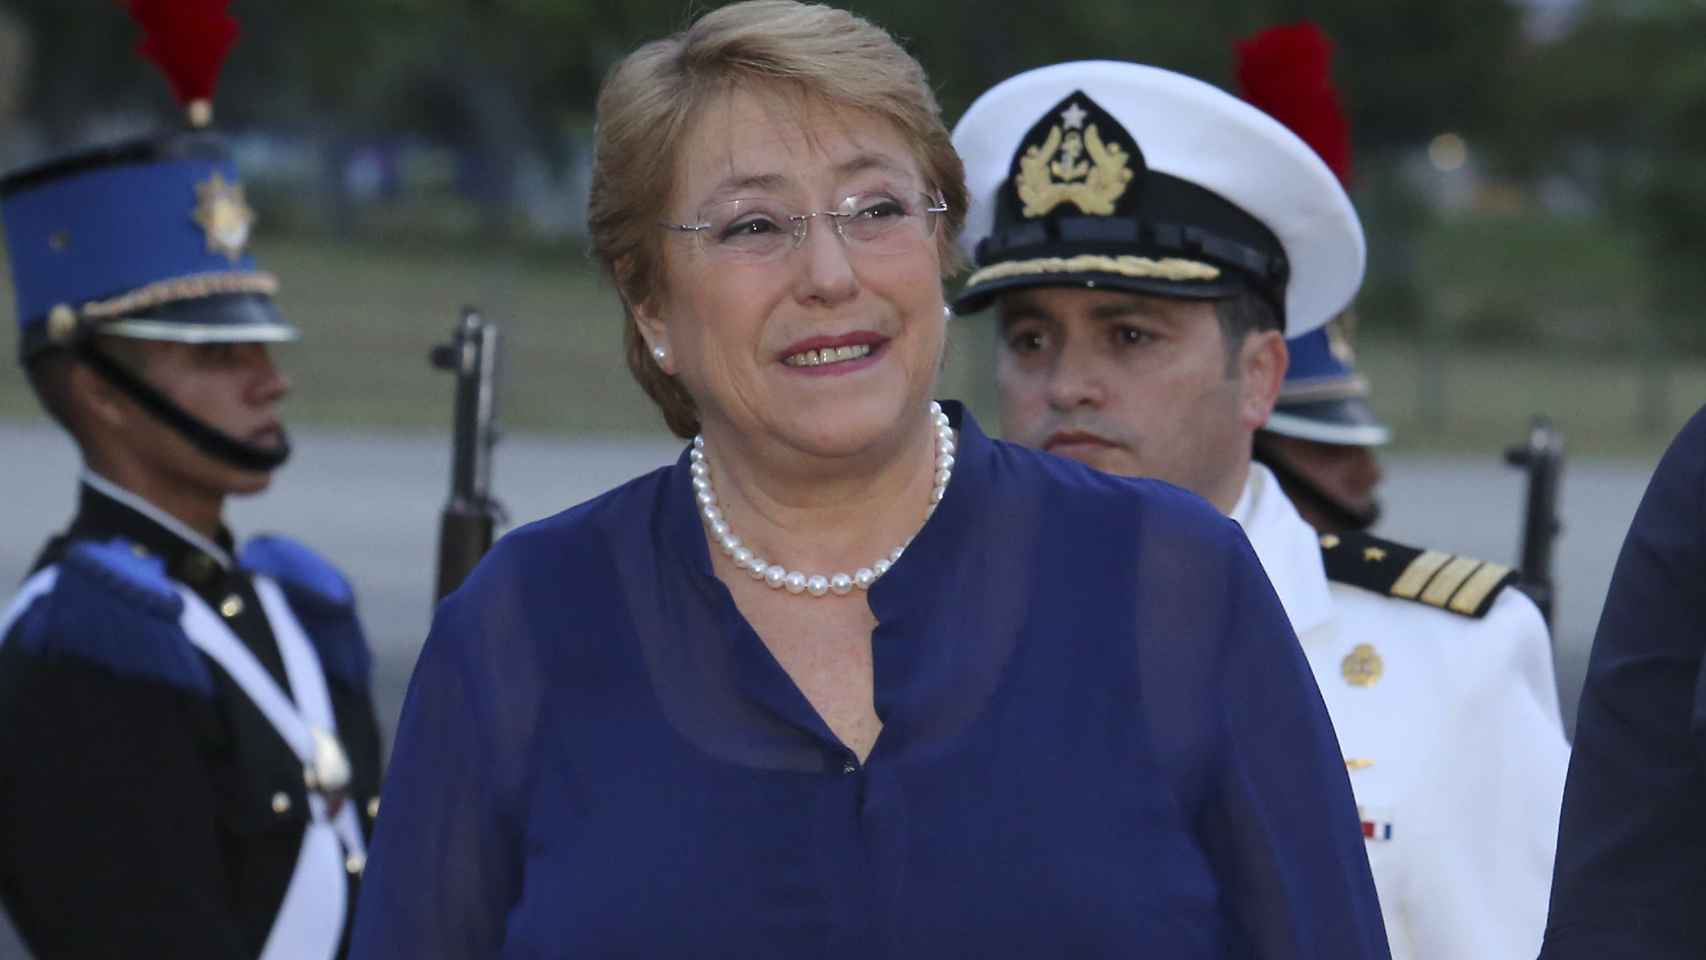 La presidenta de Chile, Michelle Bachelet.